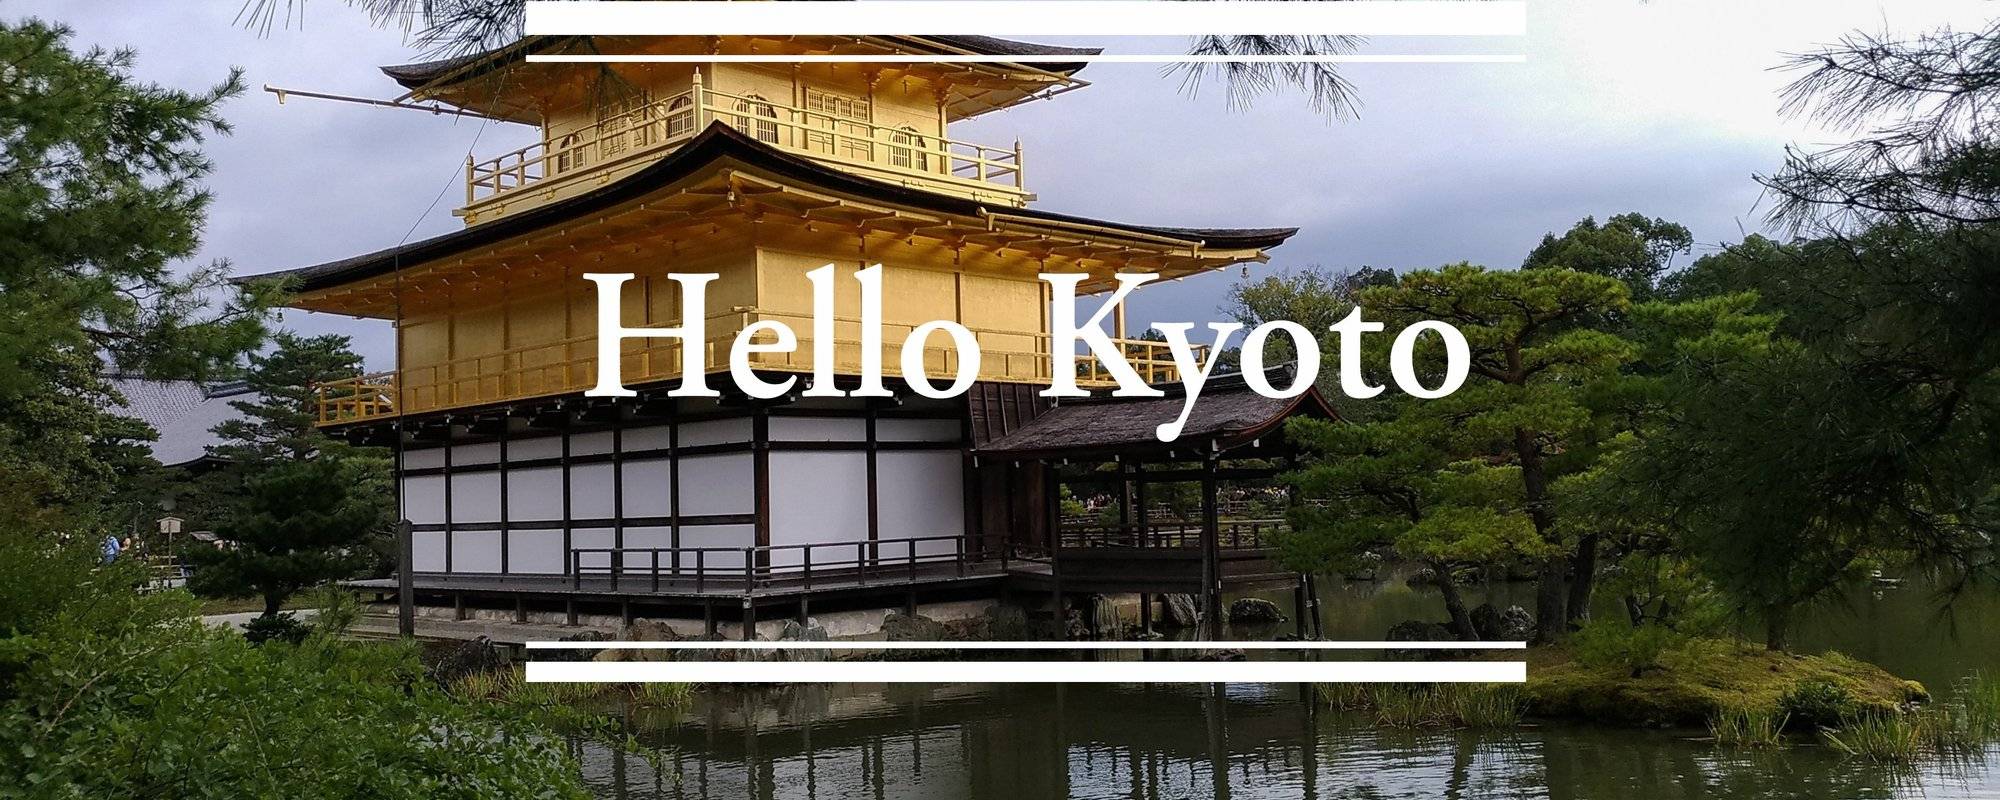 Hello Kyoto